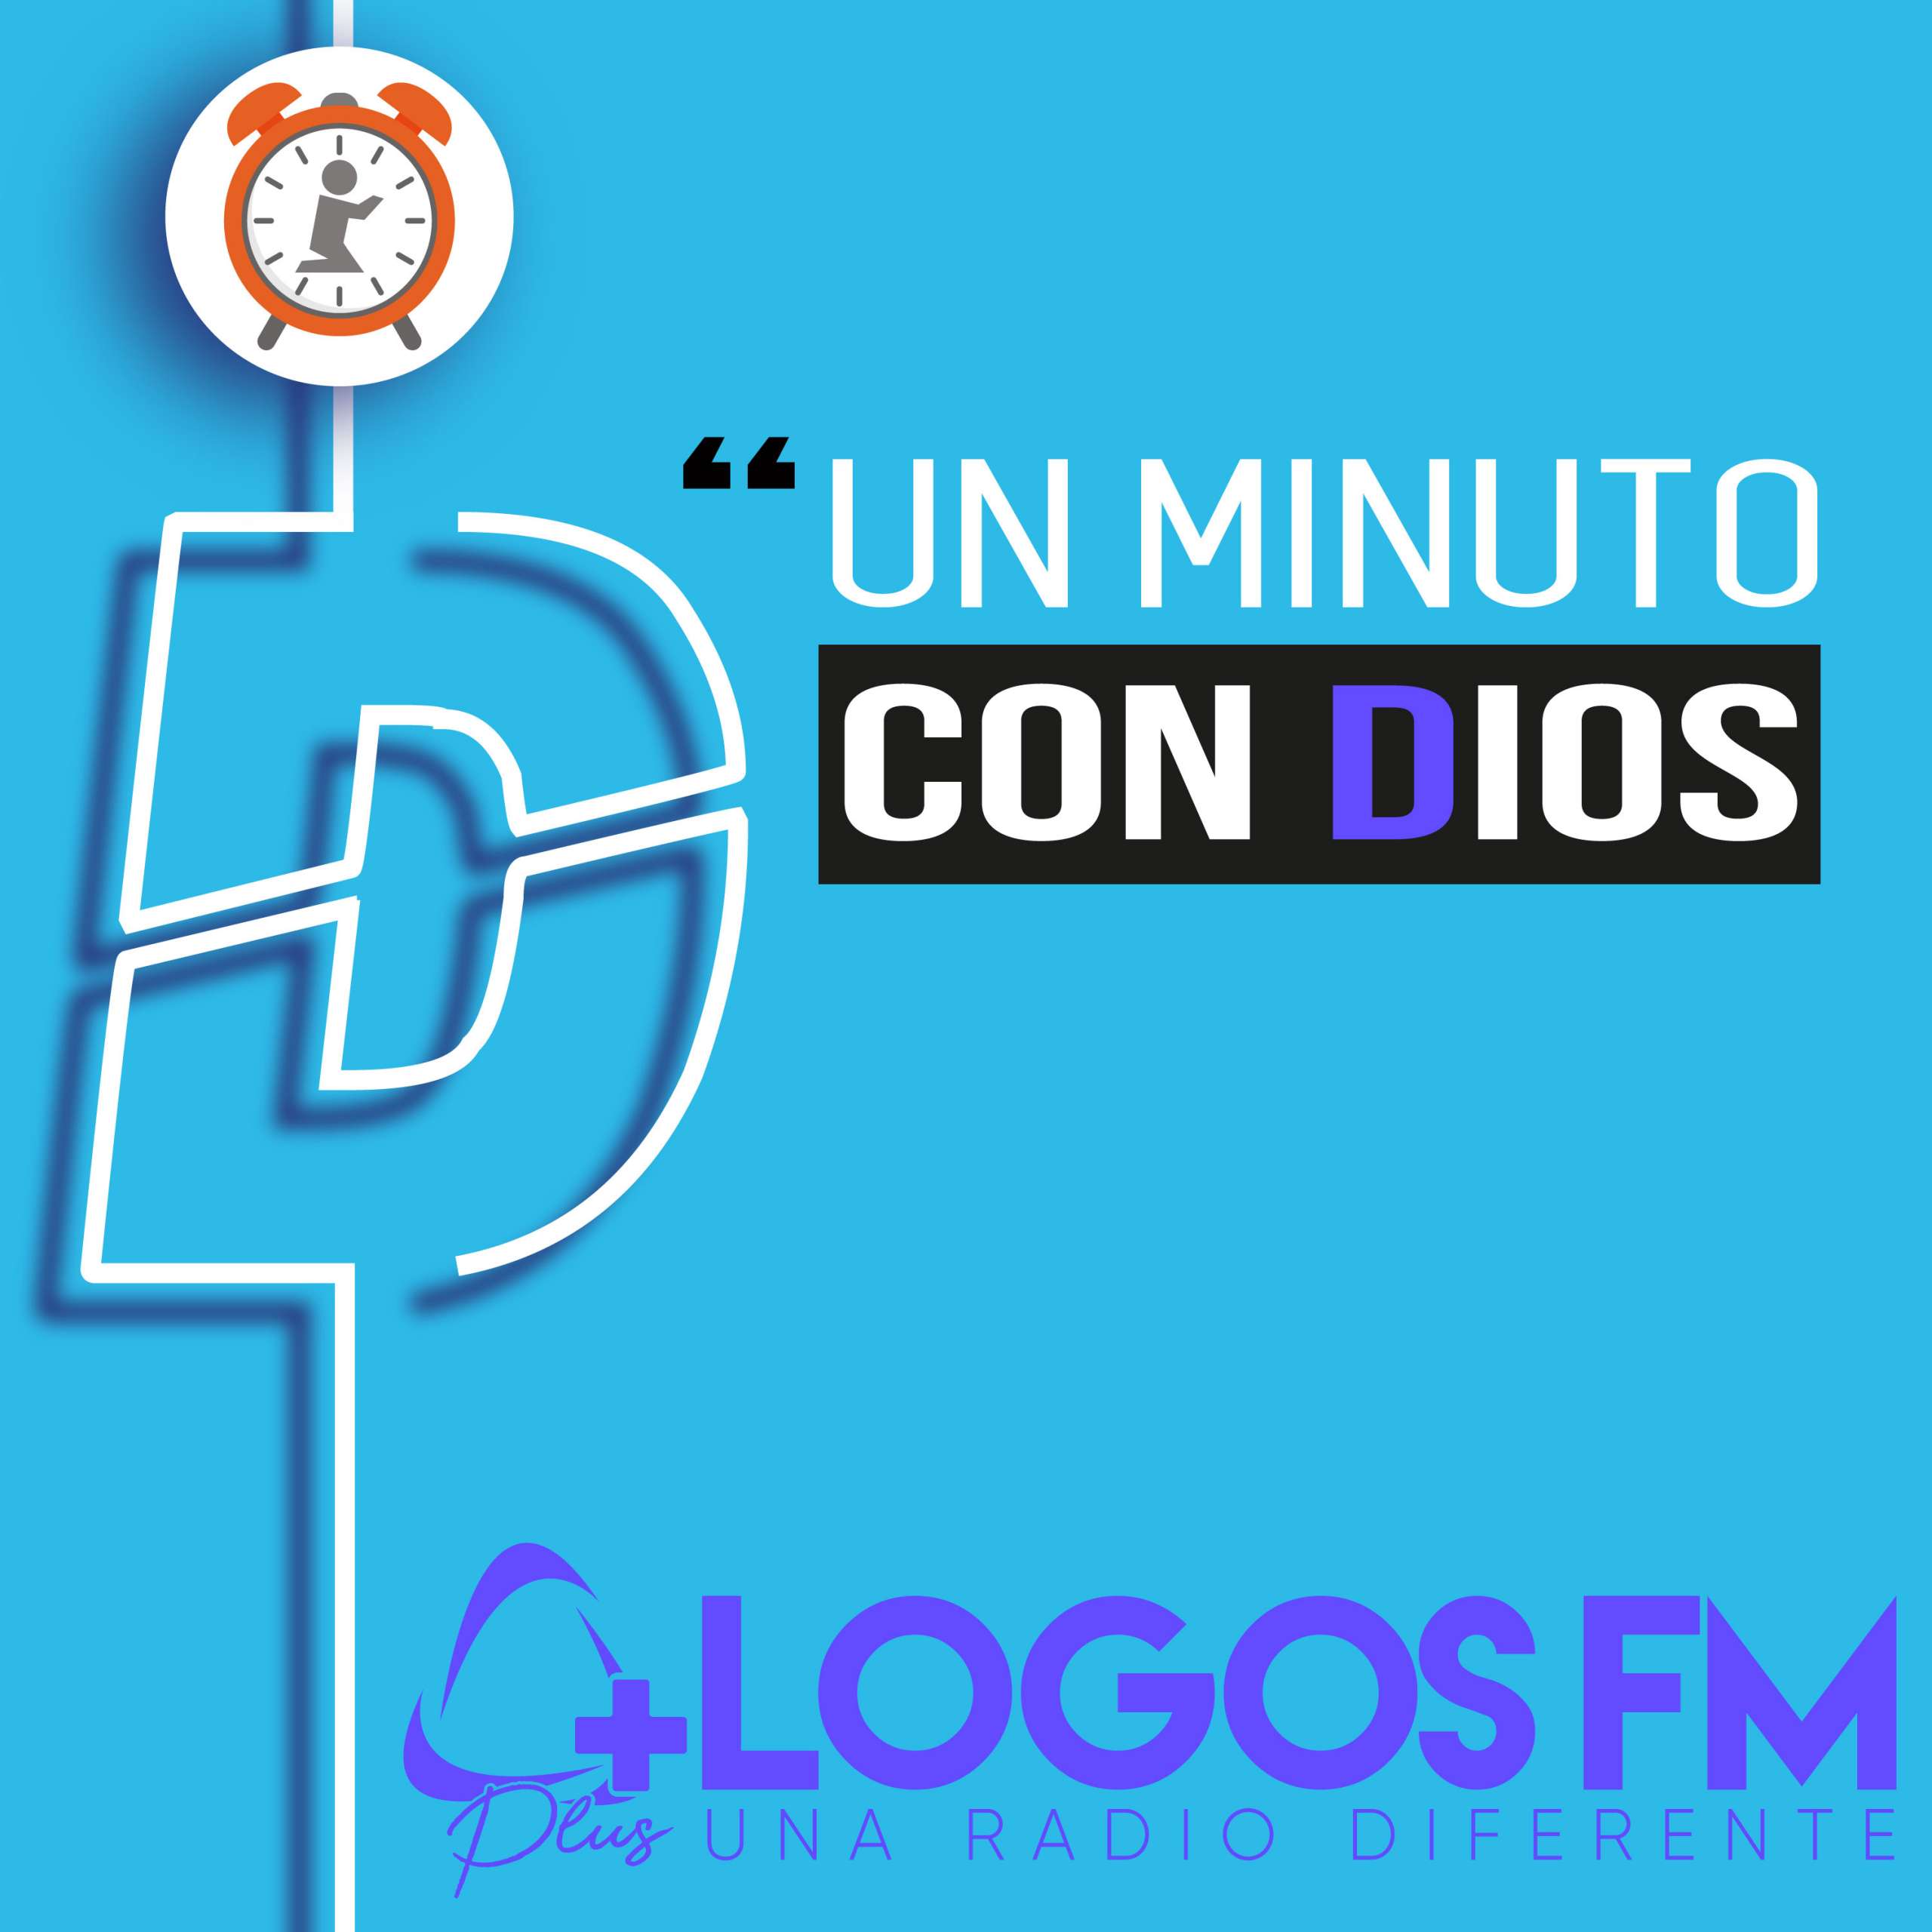 Un minuto con Dios - Episodio 416 -Loida Vargas